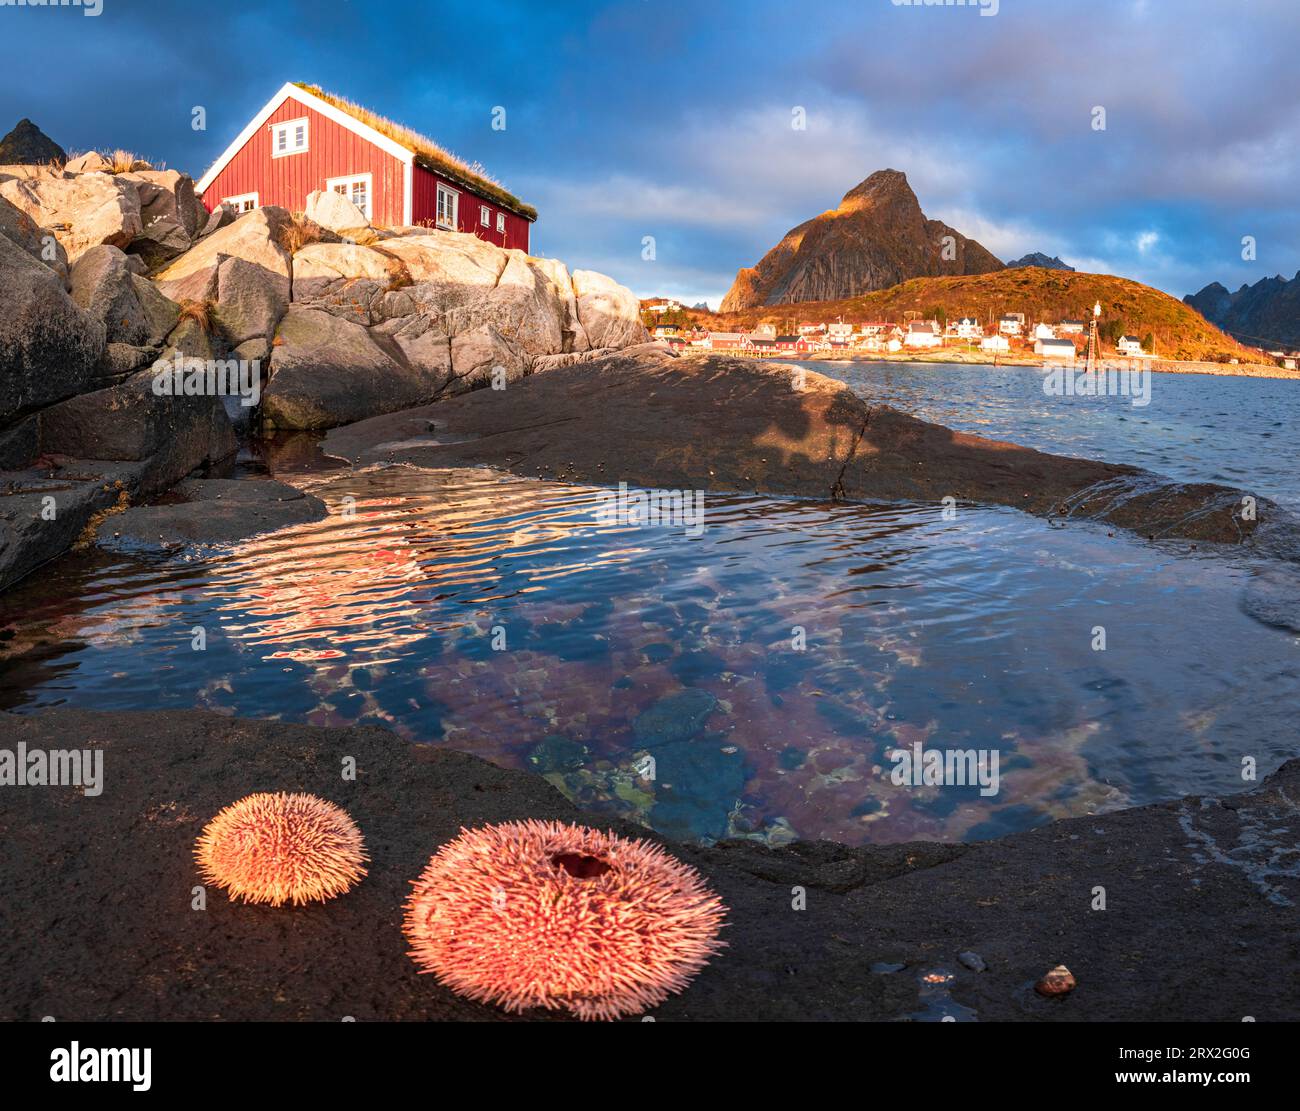 Colorful sea anemones on rocks framing a lone fisherman cabin at dawn, Reine, Lofoten Islands, Nordland, Norway, Scandinavia, Europe Stock Photo